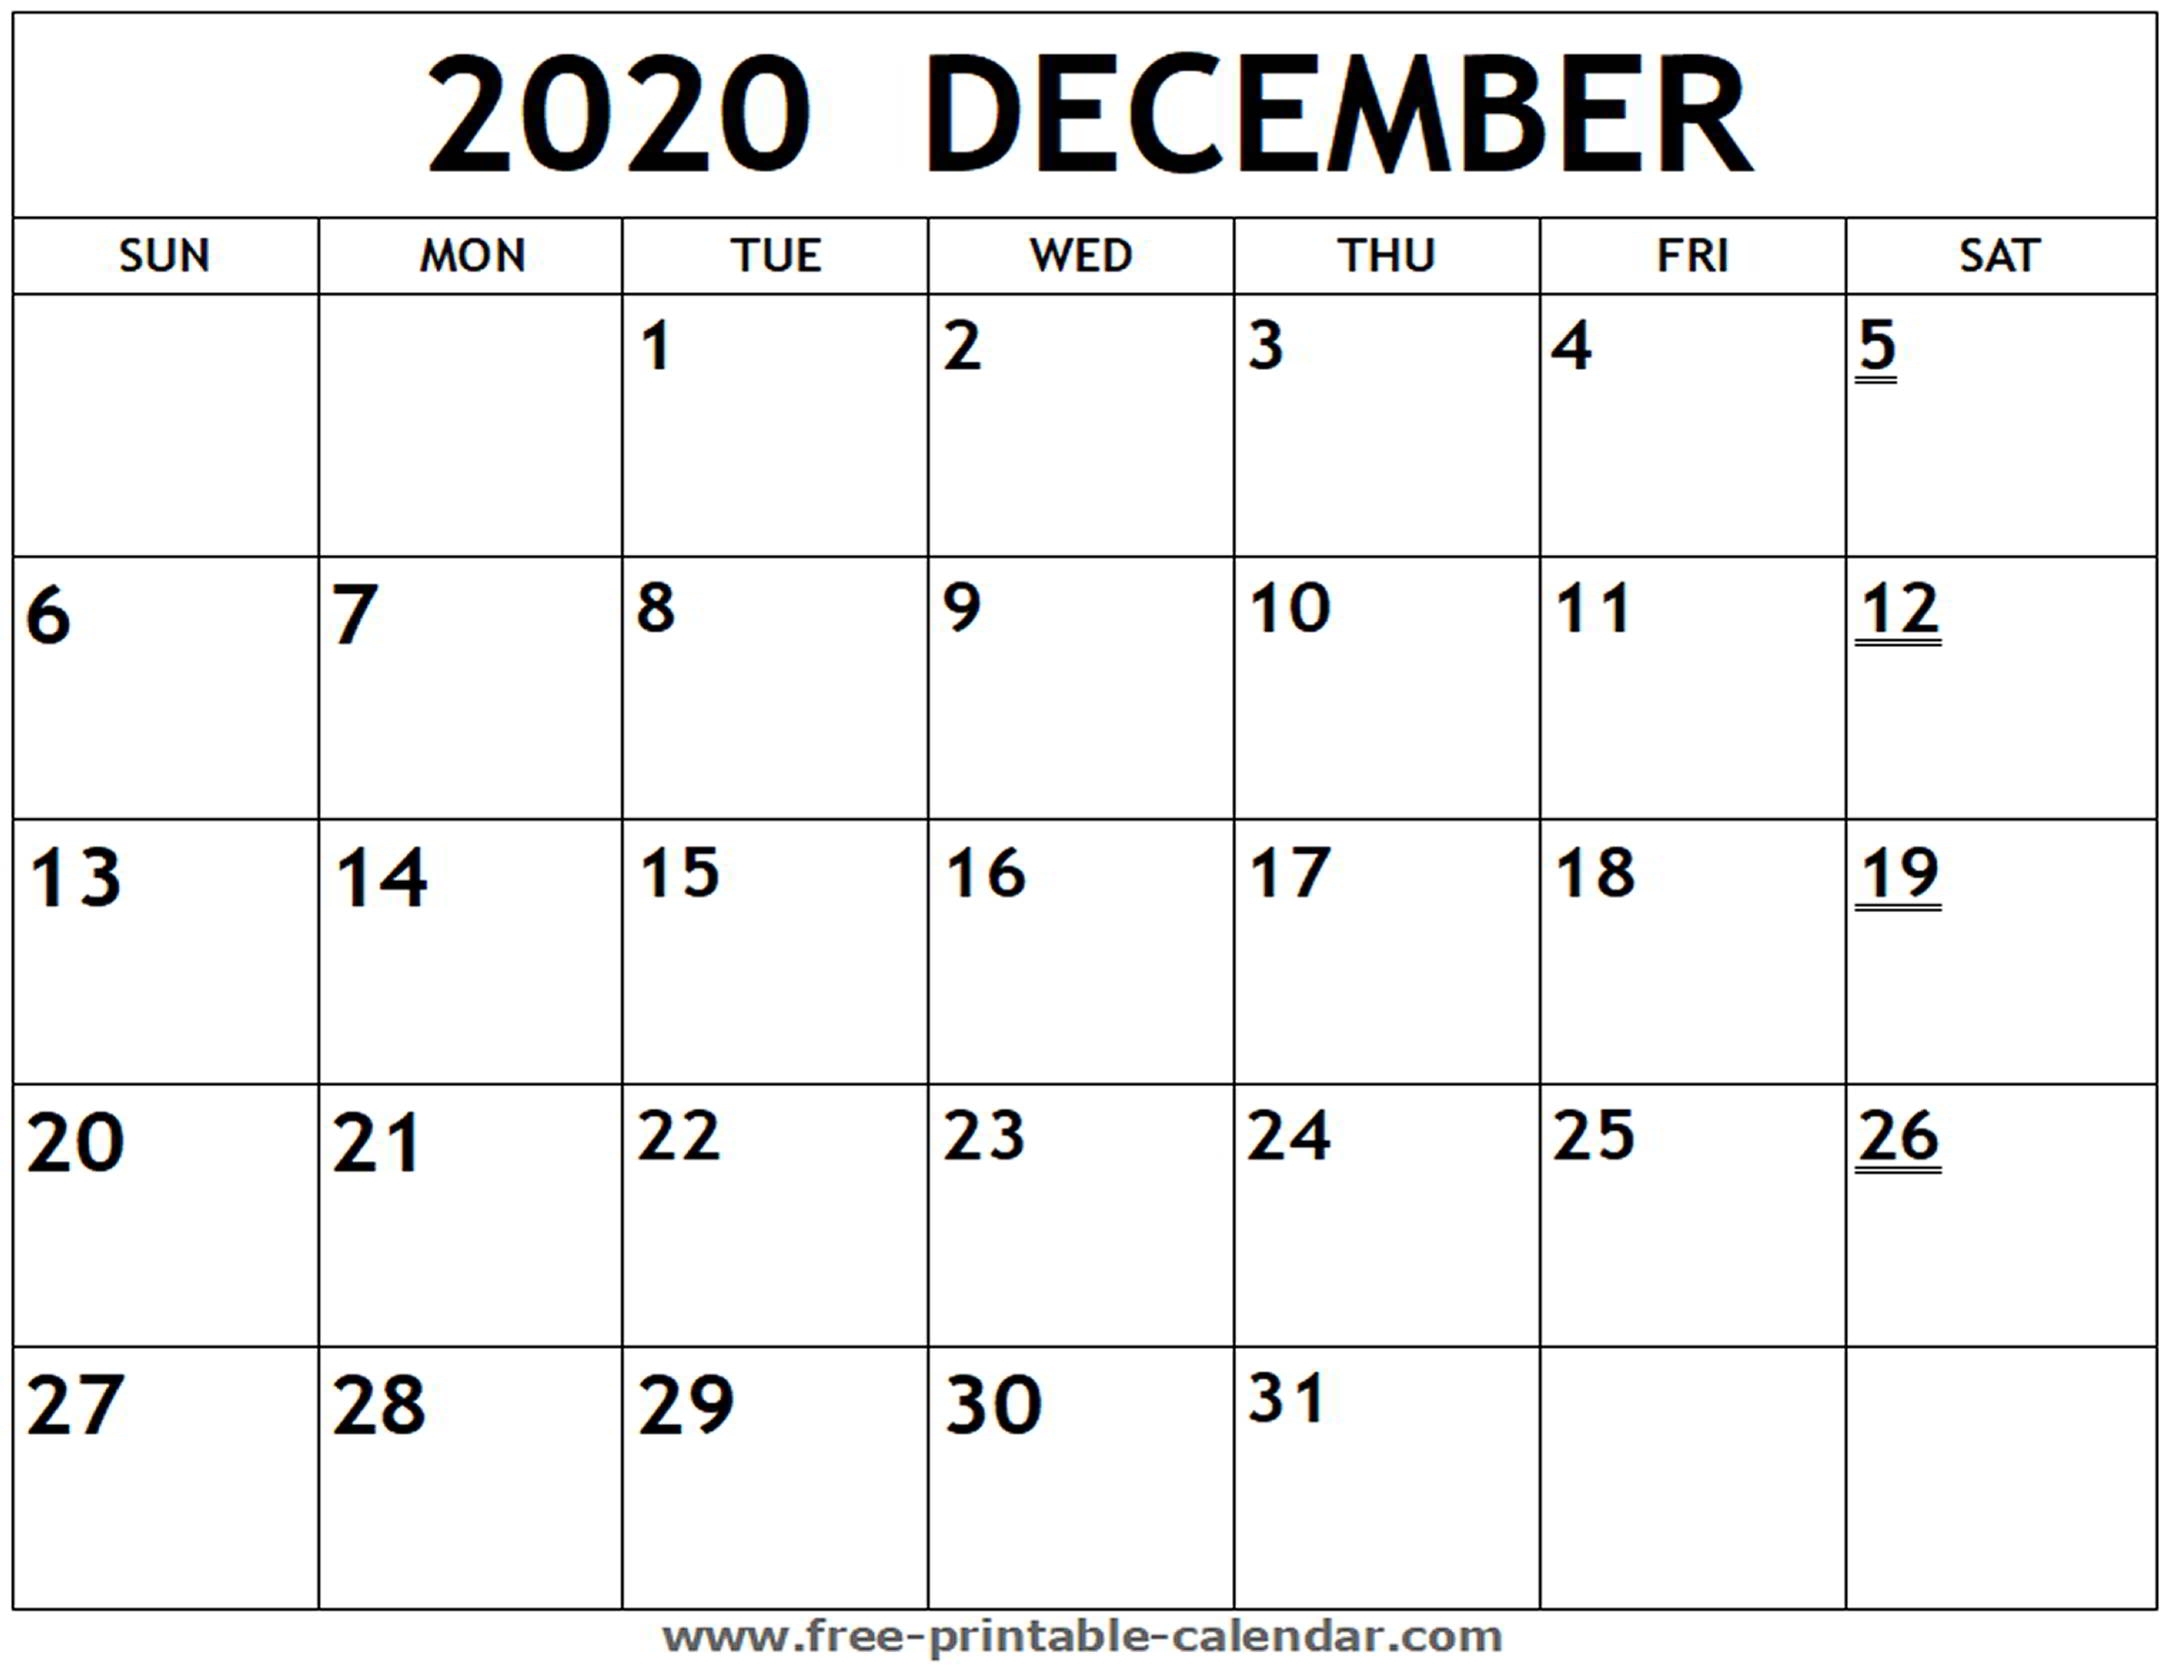 Printable 2020 December Calendar - Free-Printable-Calendar